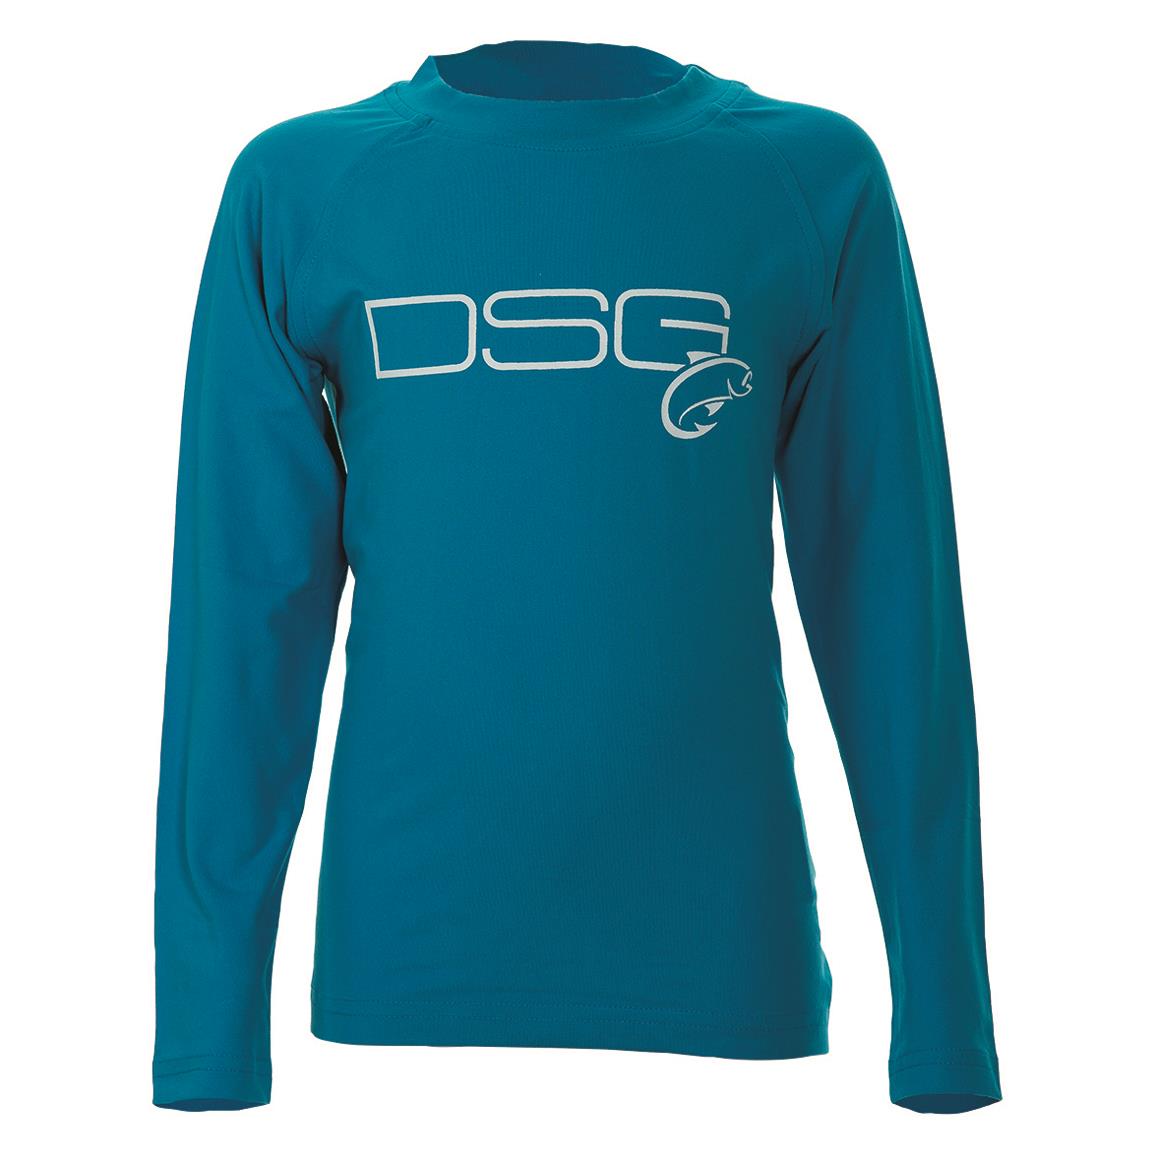 DSG Fishing Girls' Youth Shirt, Sea Blue